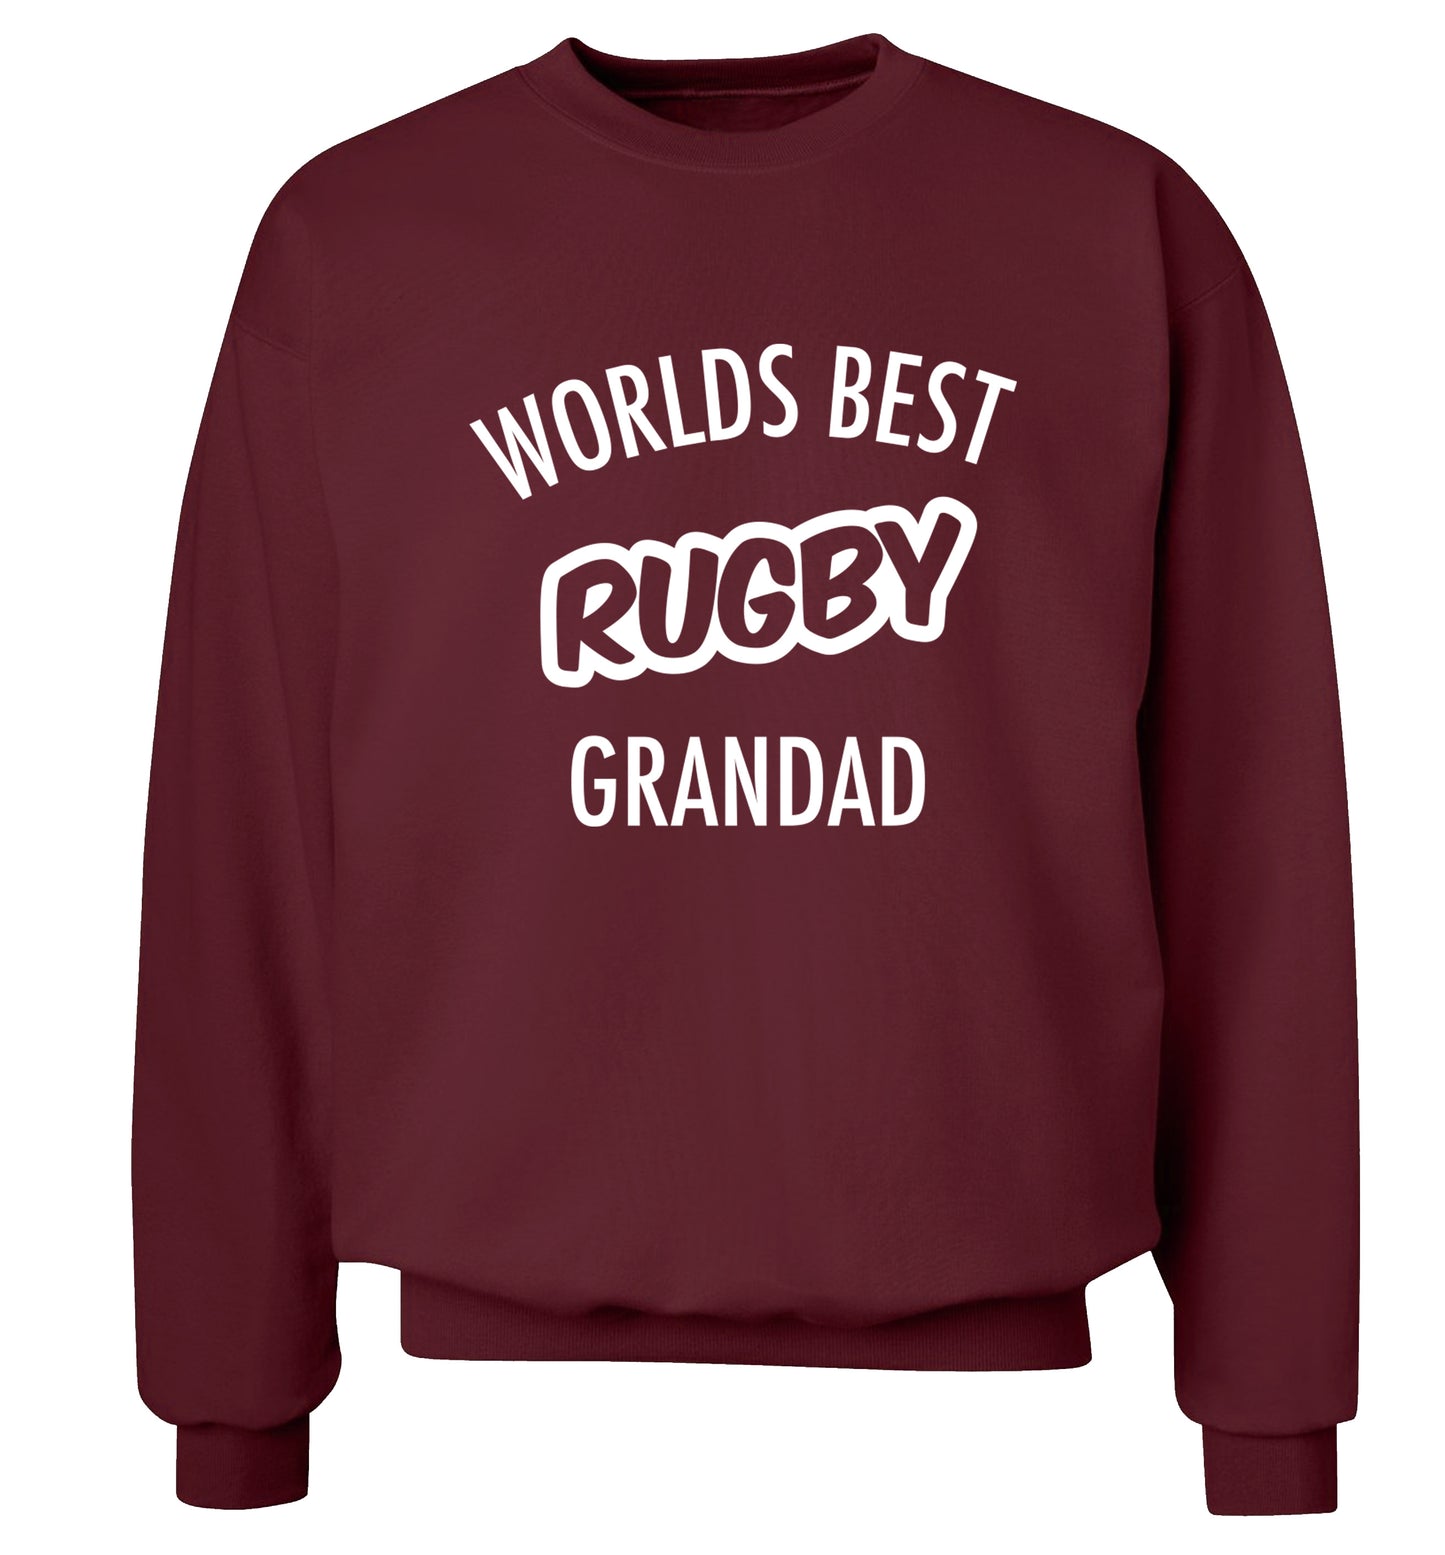 Worlds best rugby grandad Adult's unisex maroon Sweater 2XL